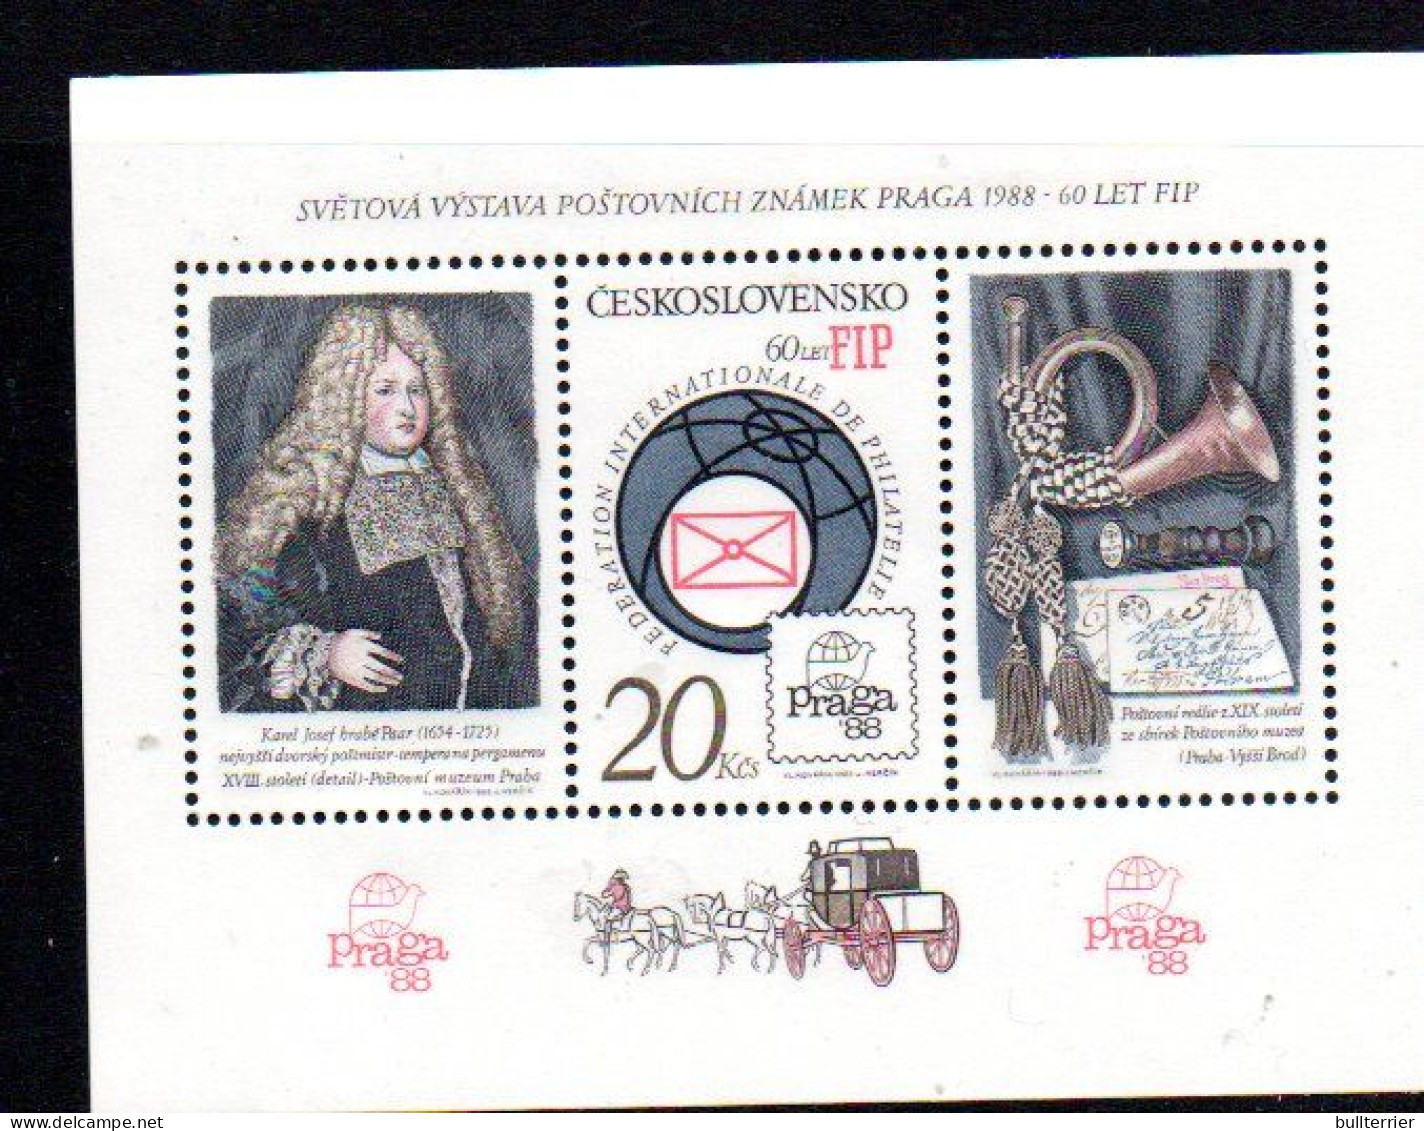 CZECHOSLOVAKIA - 1986 - PRAGA  SOUVENIR SHEET MINT NEVER HINGED, SG CAT £14.50 - Unused Stamps